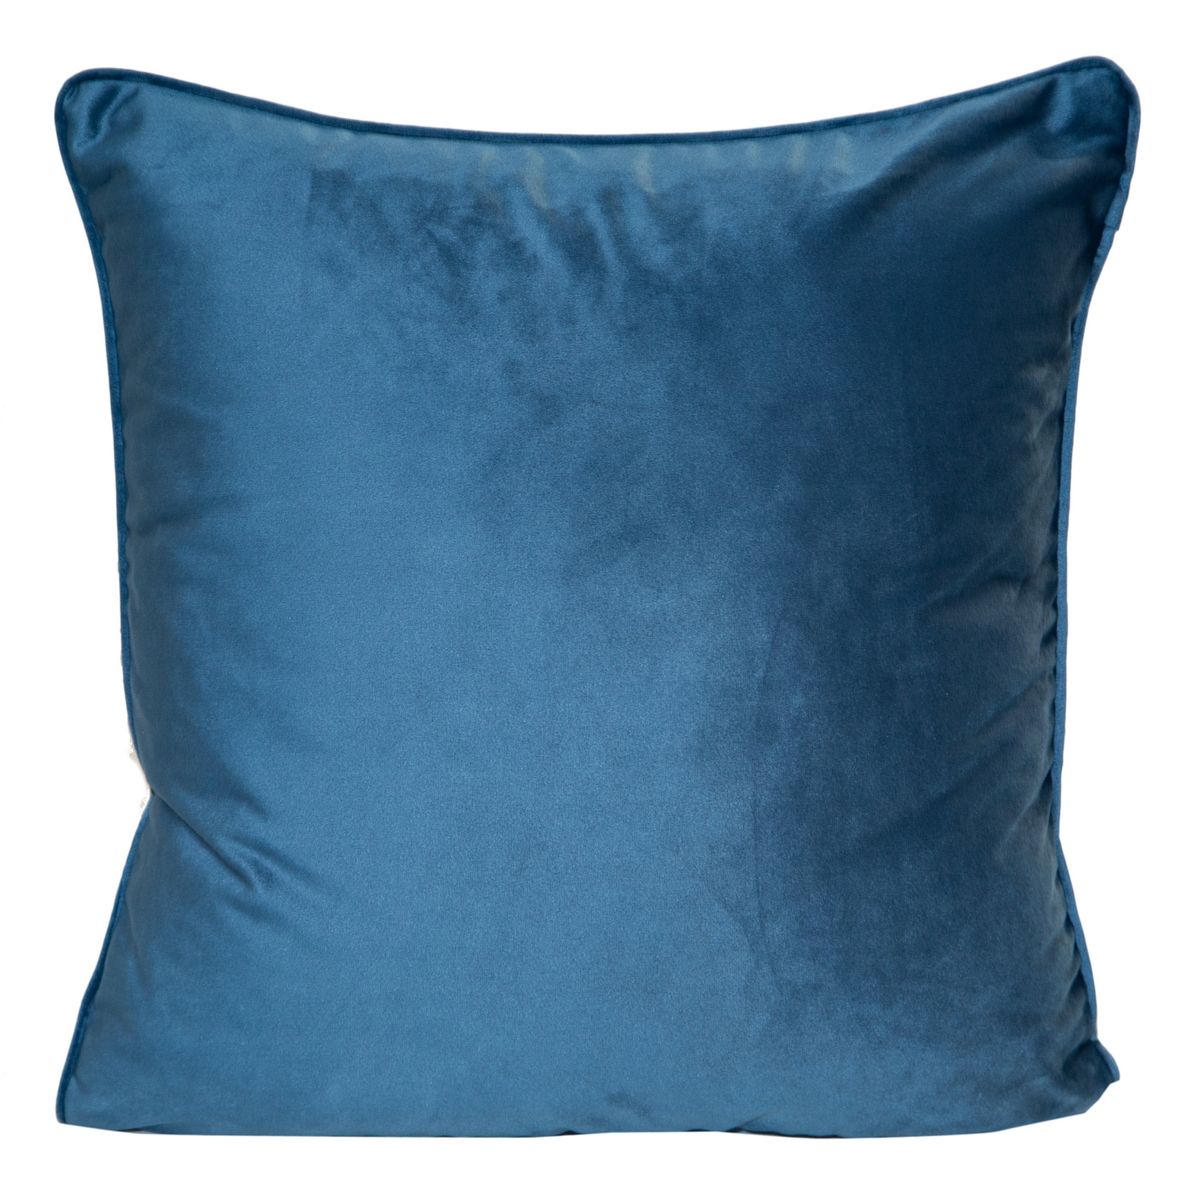 Dekoratyvinė aksominė pagalvėlė “Sibel” mėlyna, 2 vnt.